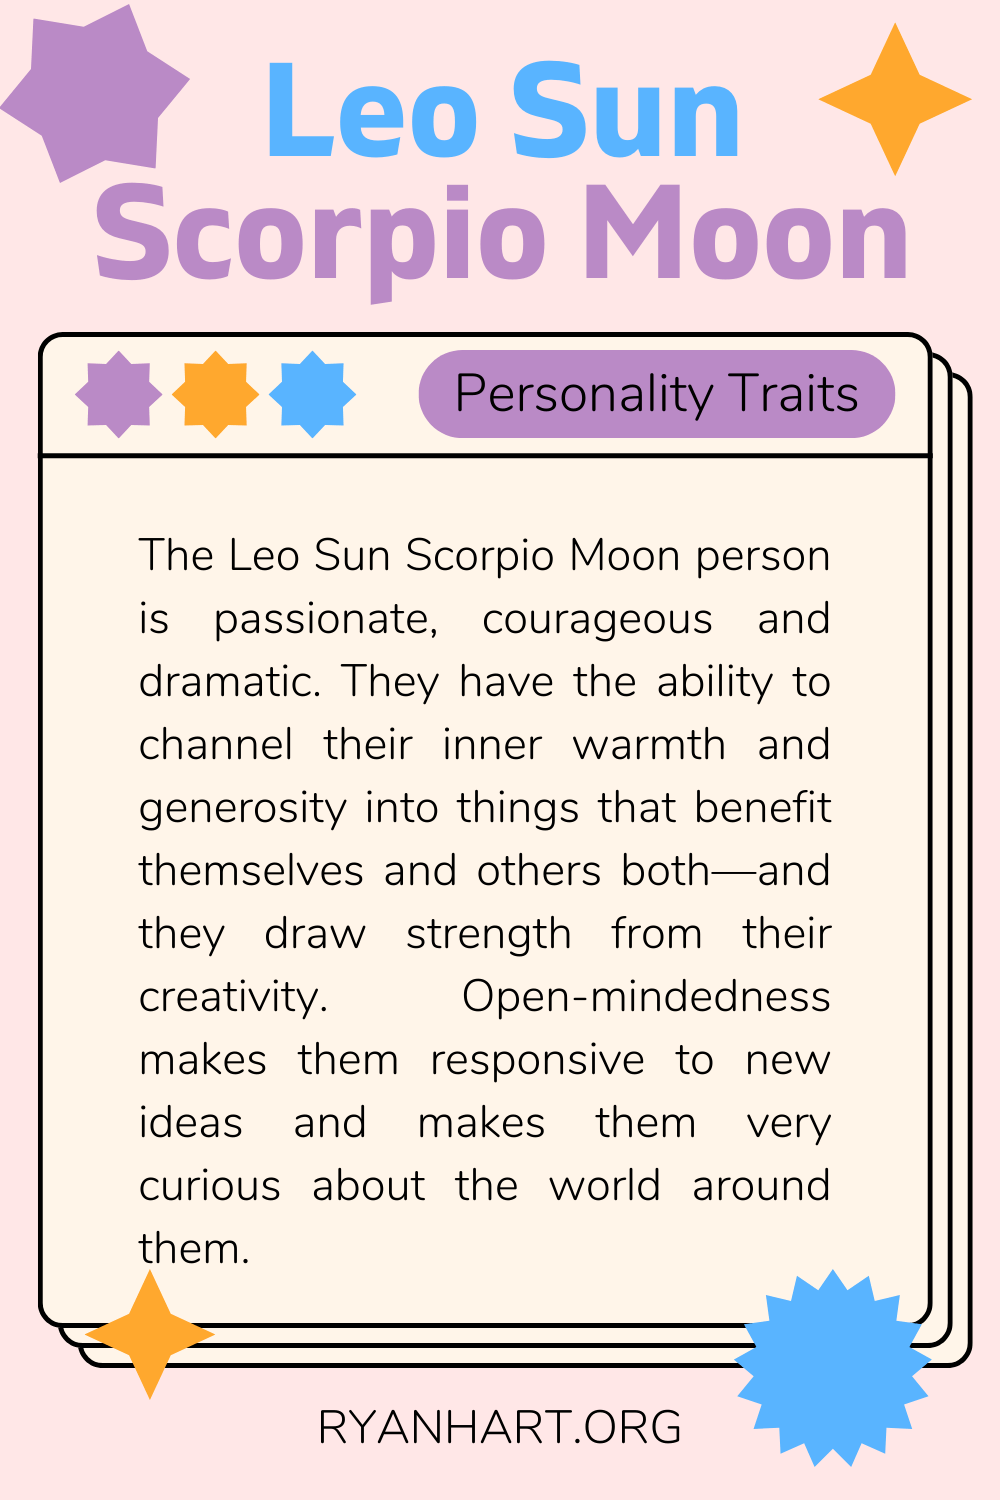 Leo Sun Scorpio Moon Description